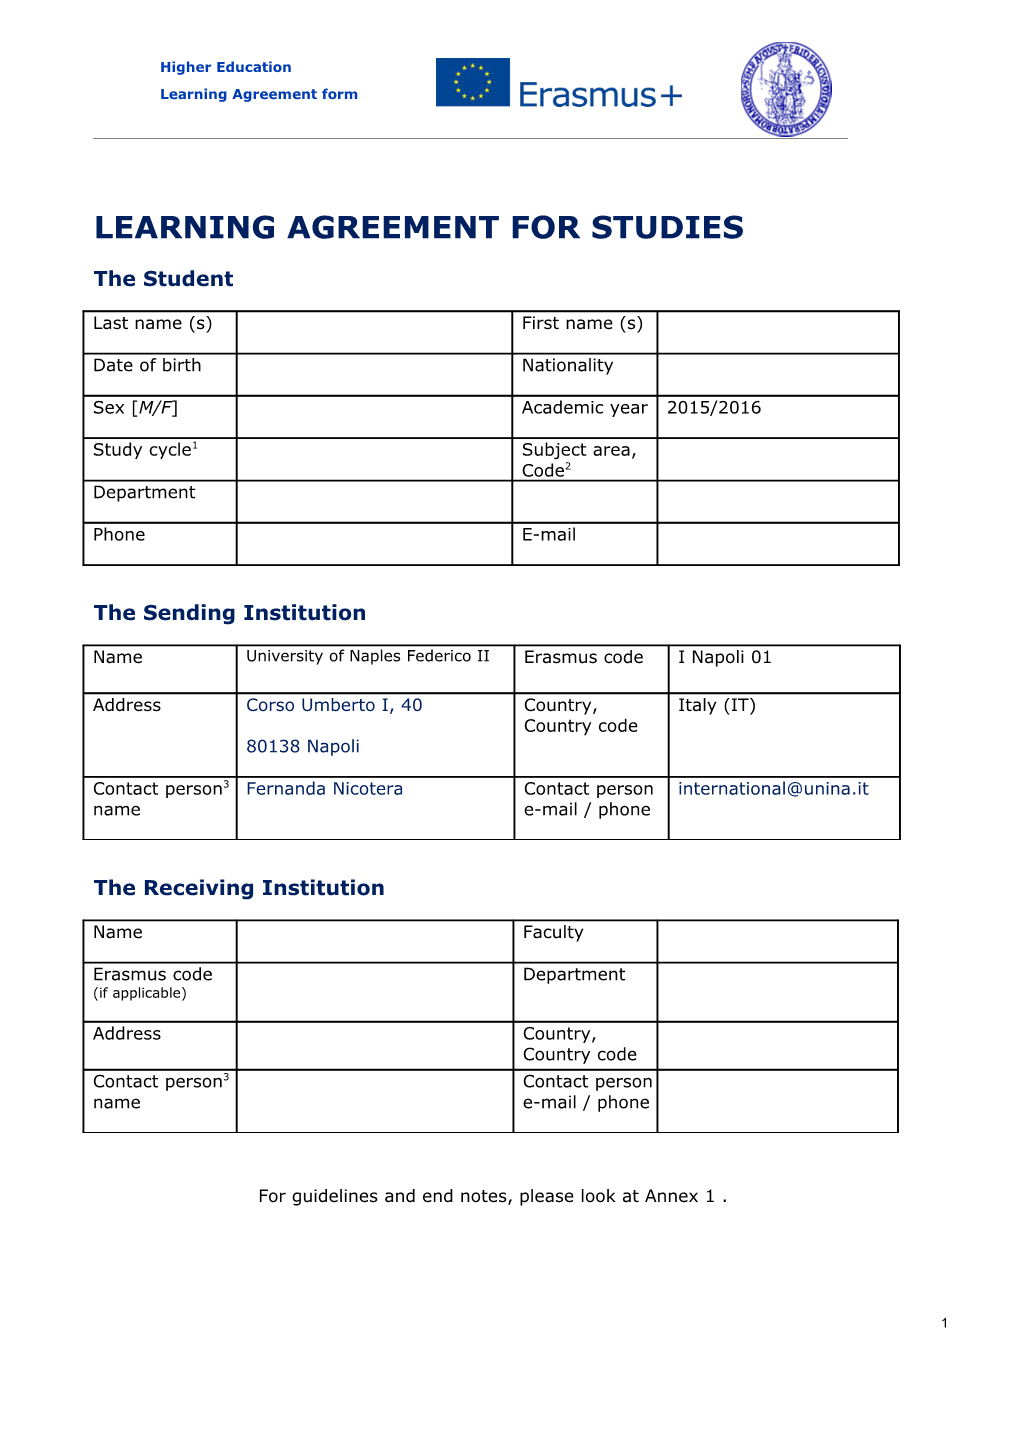 Learning Agreement for Studies s1